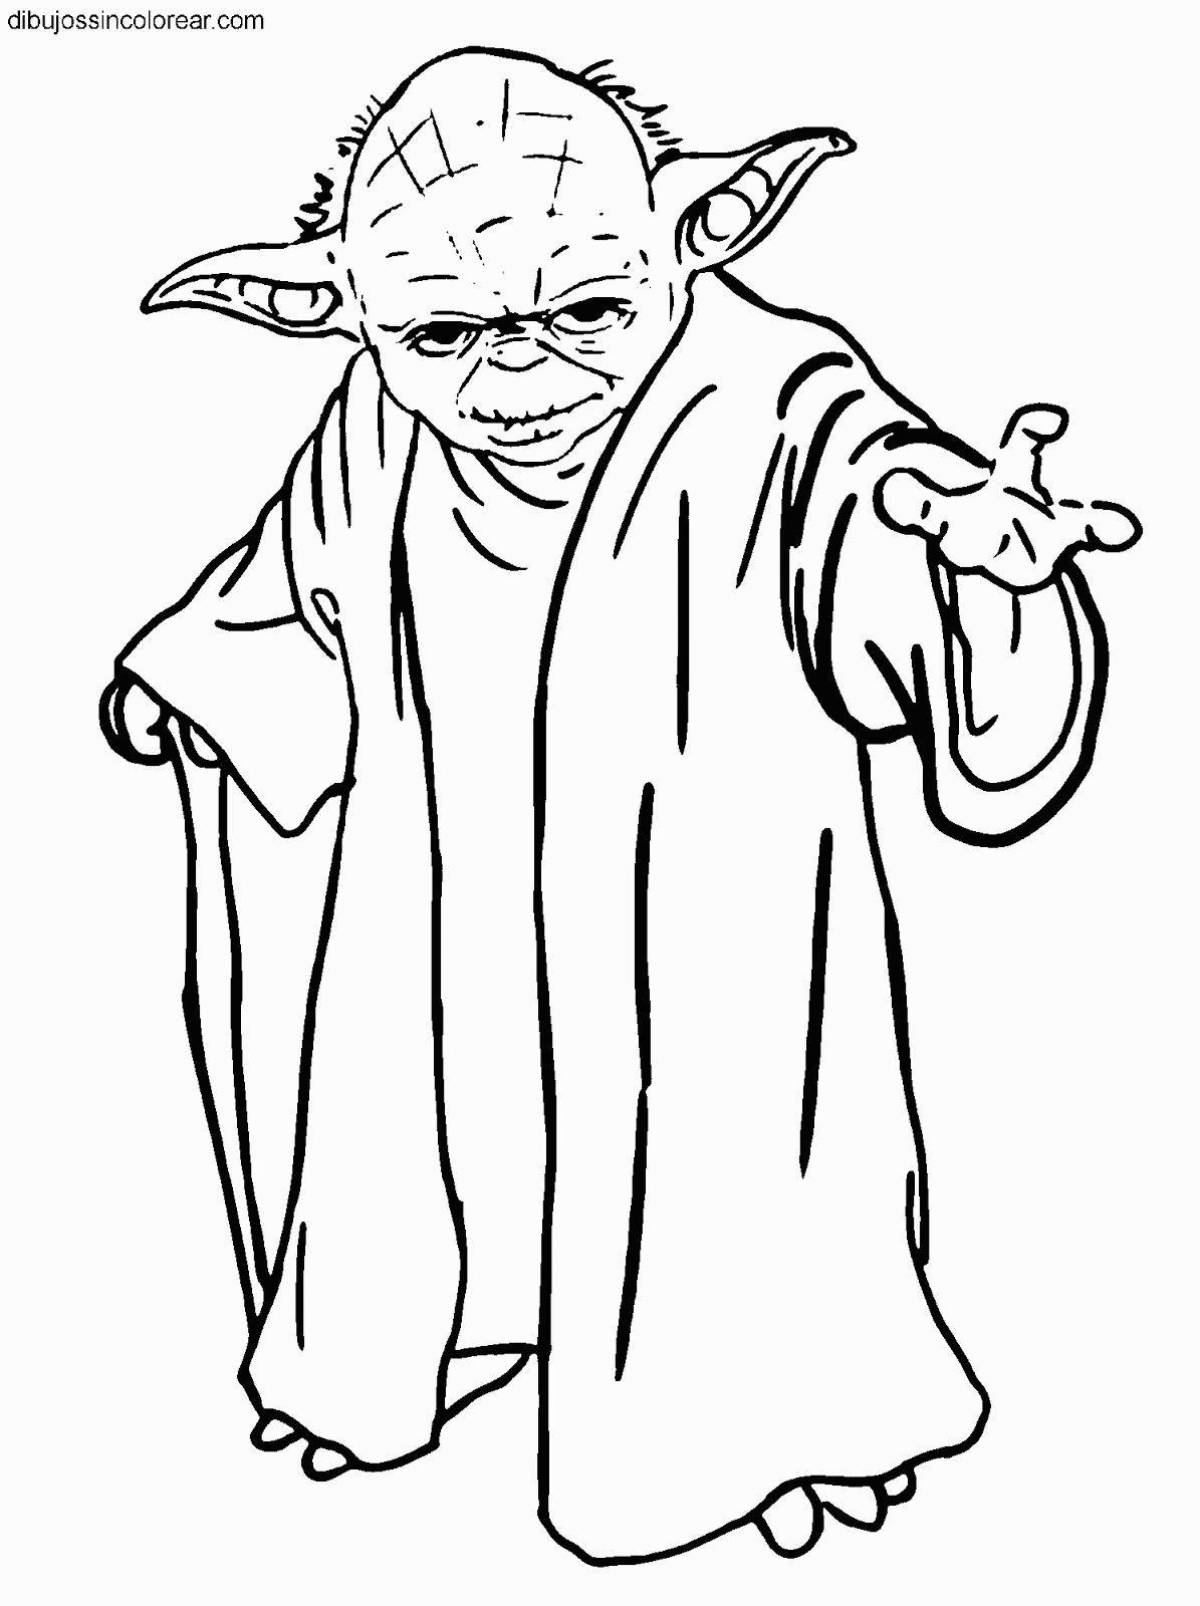 Flawless Master Yoda coloring page